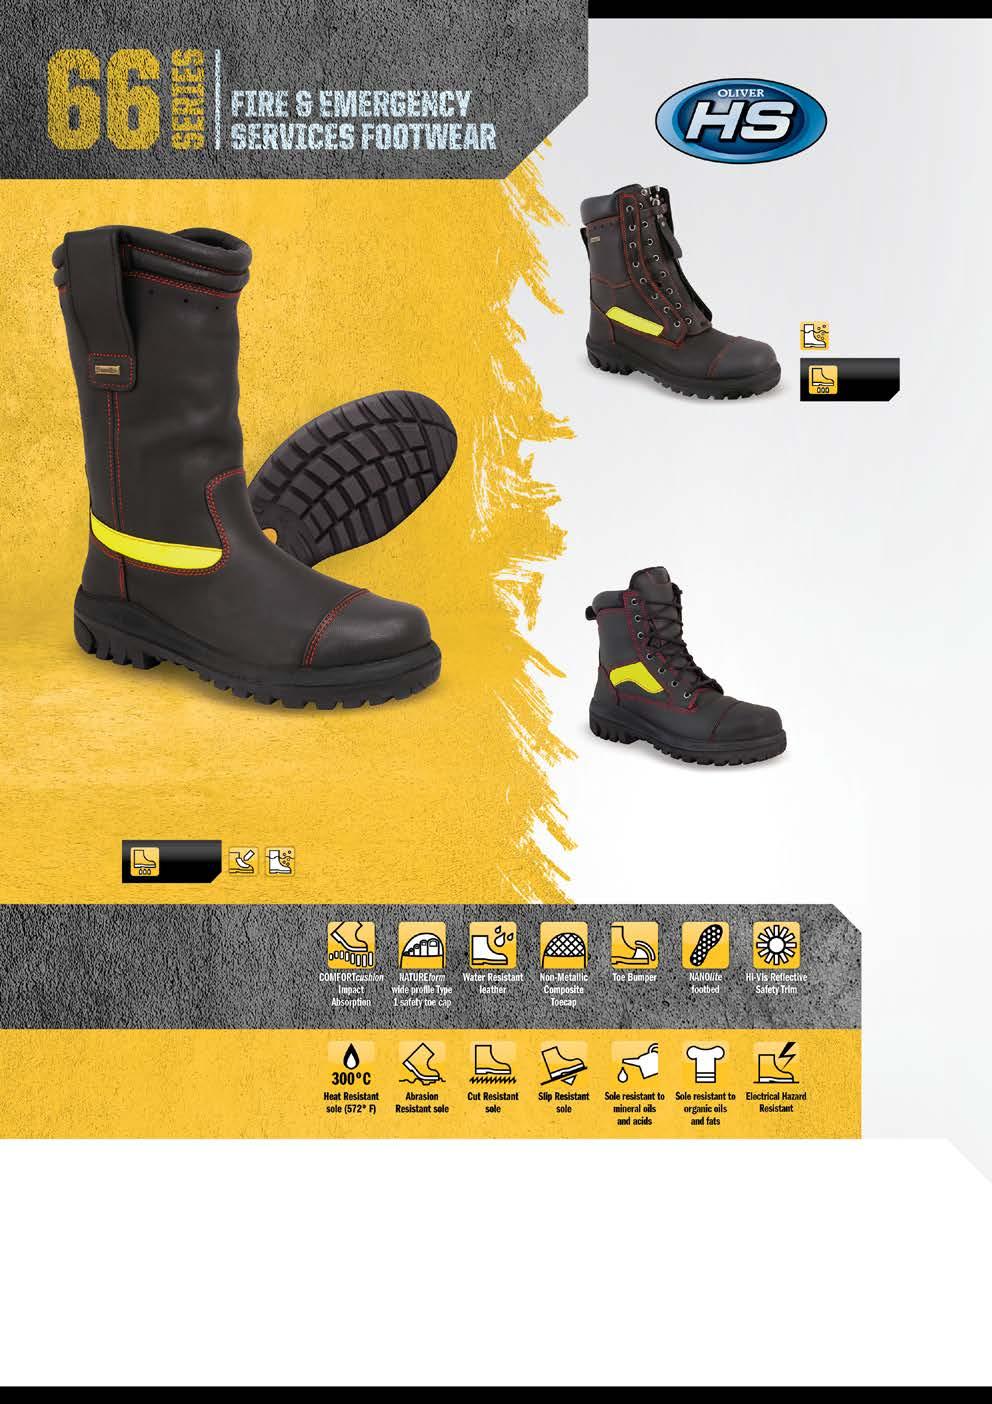 COMPLIES COMPLIES AS/NZS 4821:2014 EN 15090:2012 Type 2 Structural Firefighting Footwear AS/NZS 4821:2014 EN 15090:2012 Type 2 Structural Firefighting Footwear EXTRA FEATURES: WATERPROOF FOOTWEAR